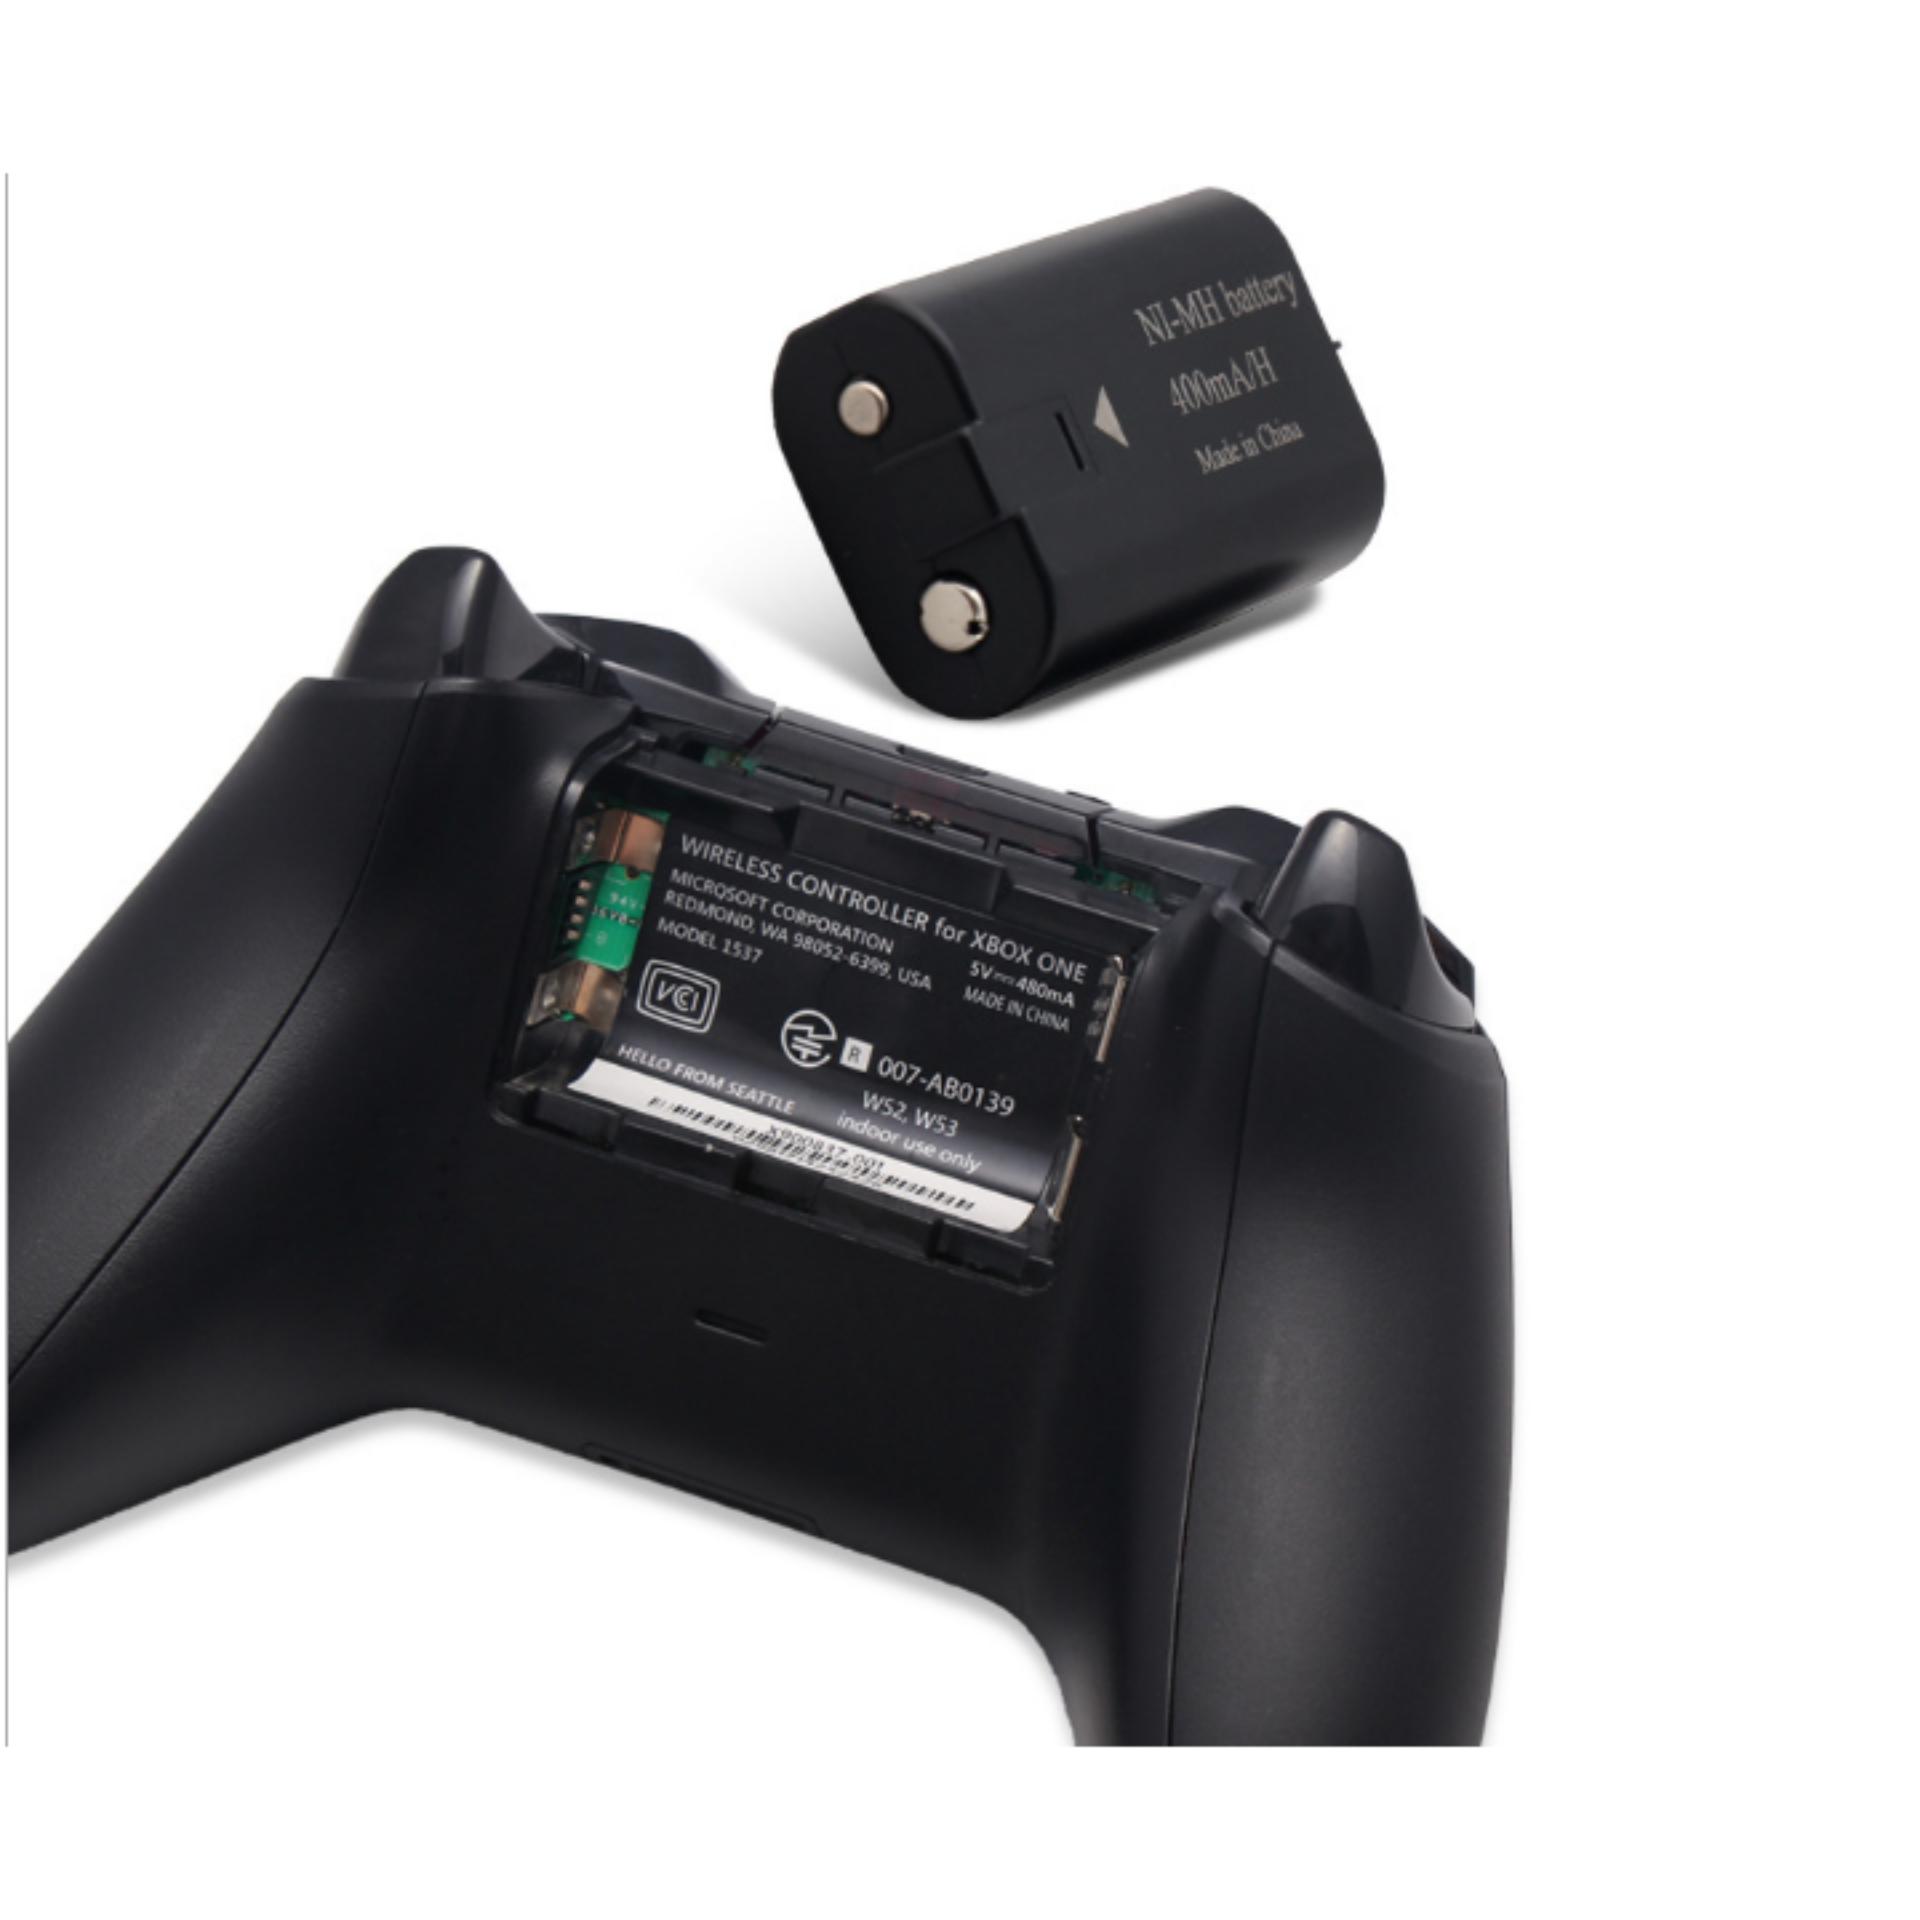 Батарейки для джойстика. Аккумулятор для контроллера Xbox one. Батарейки для джойстика Xbox one s. Xbox Wireless Controller аккумулятор. Аккумулятор для геймпада Xbox 360.